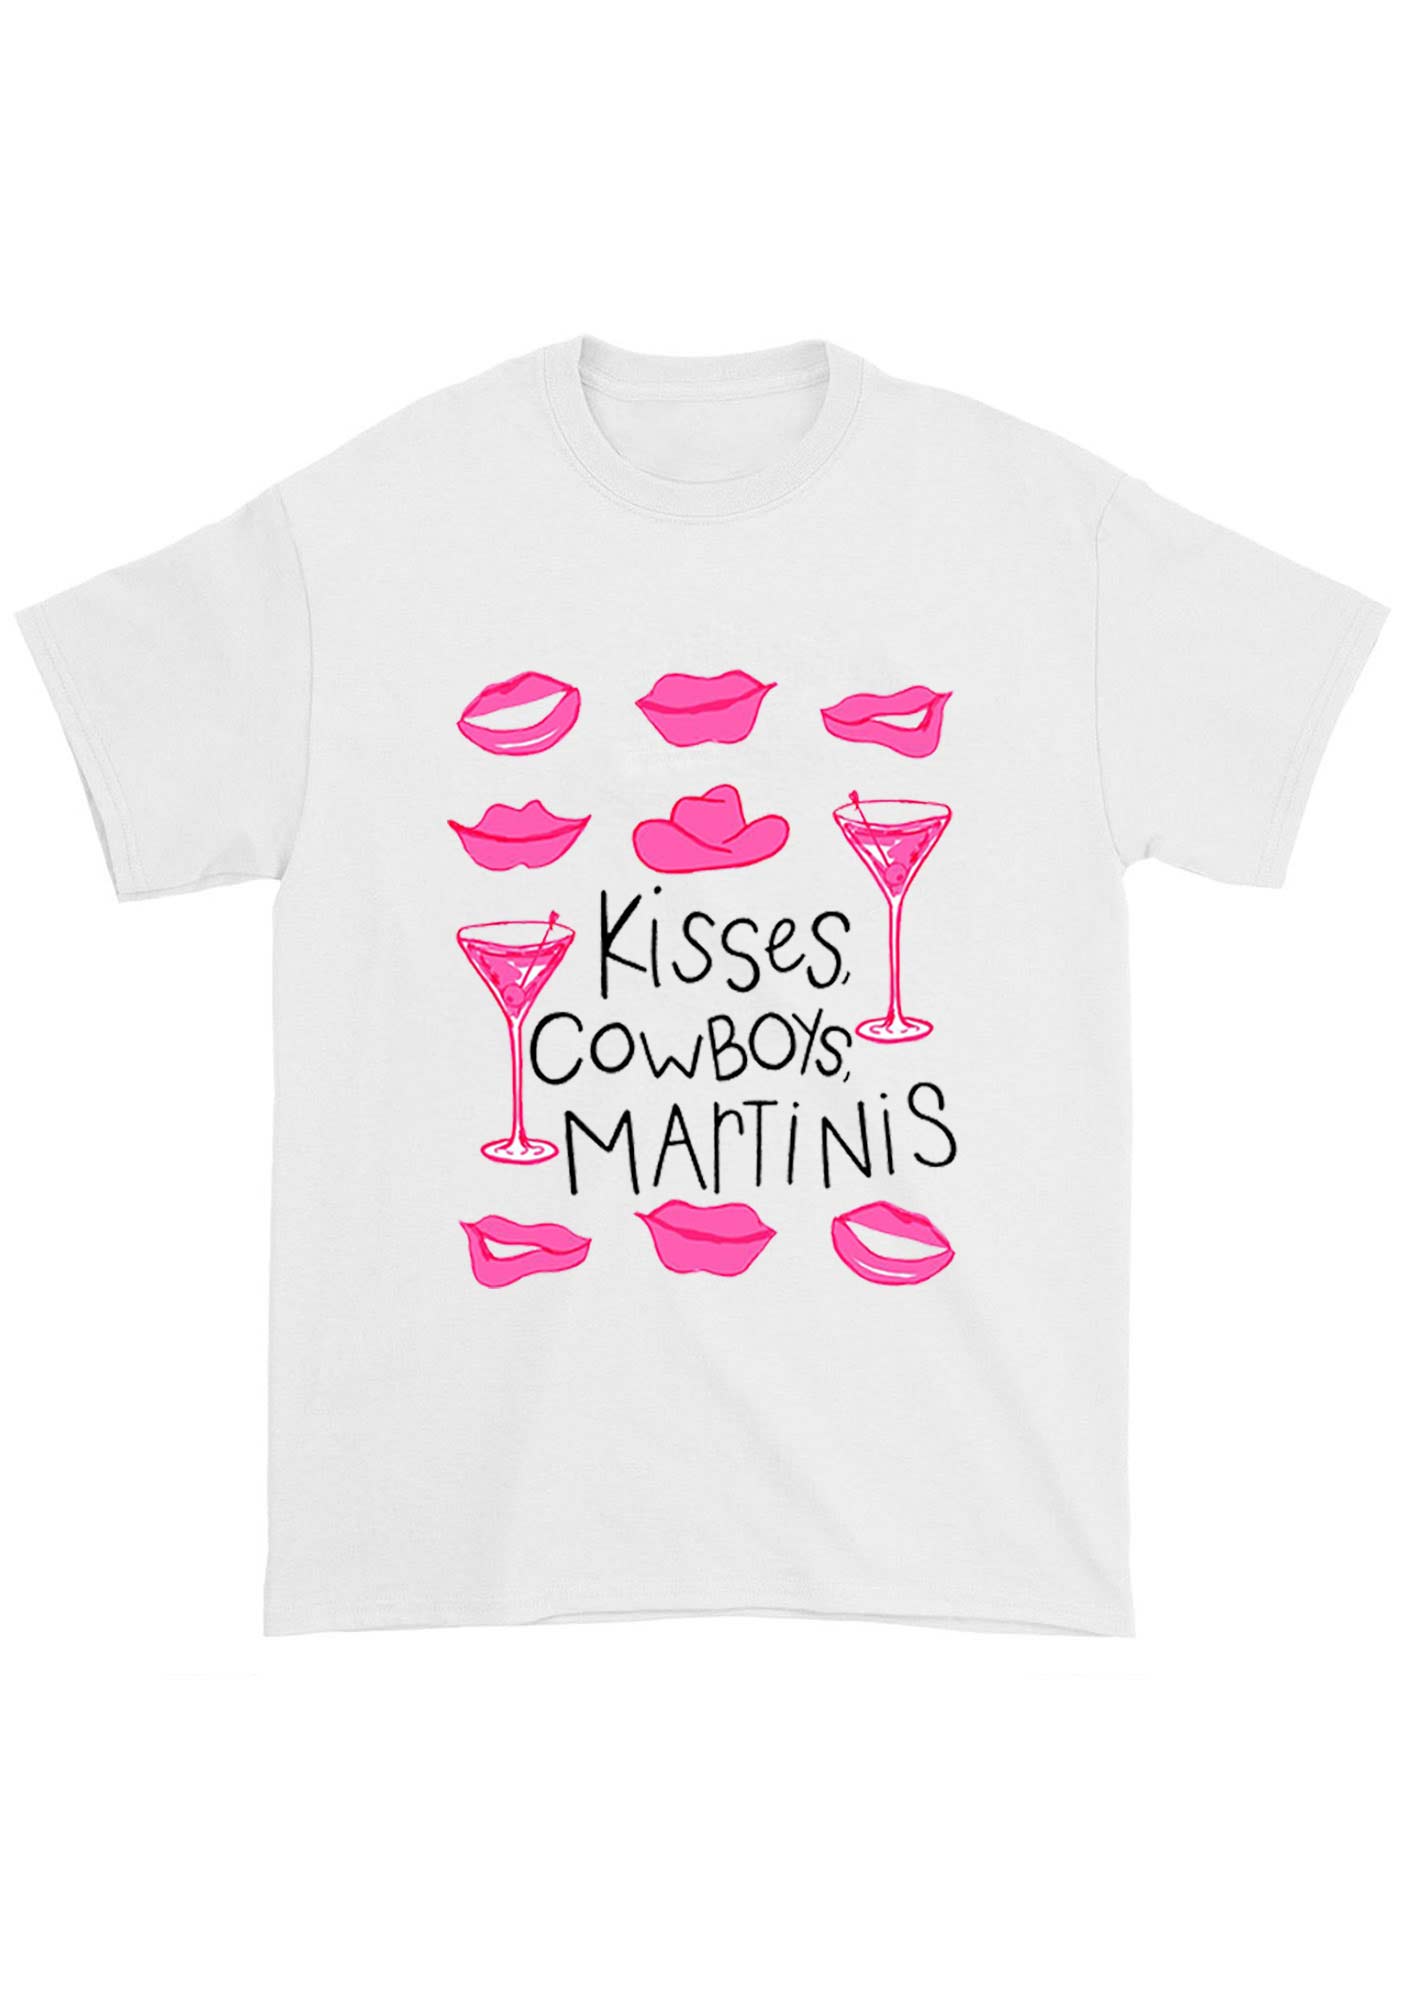 Kisses Cowboys Martinis Chunky Shirt